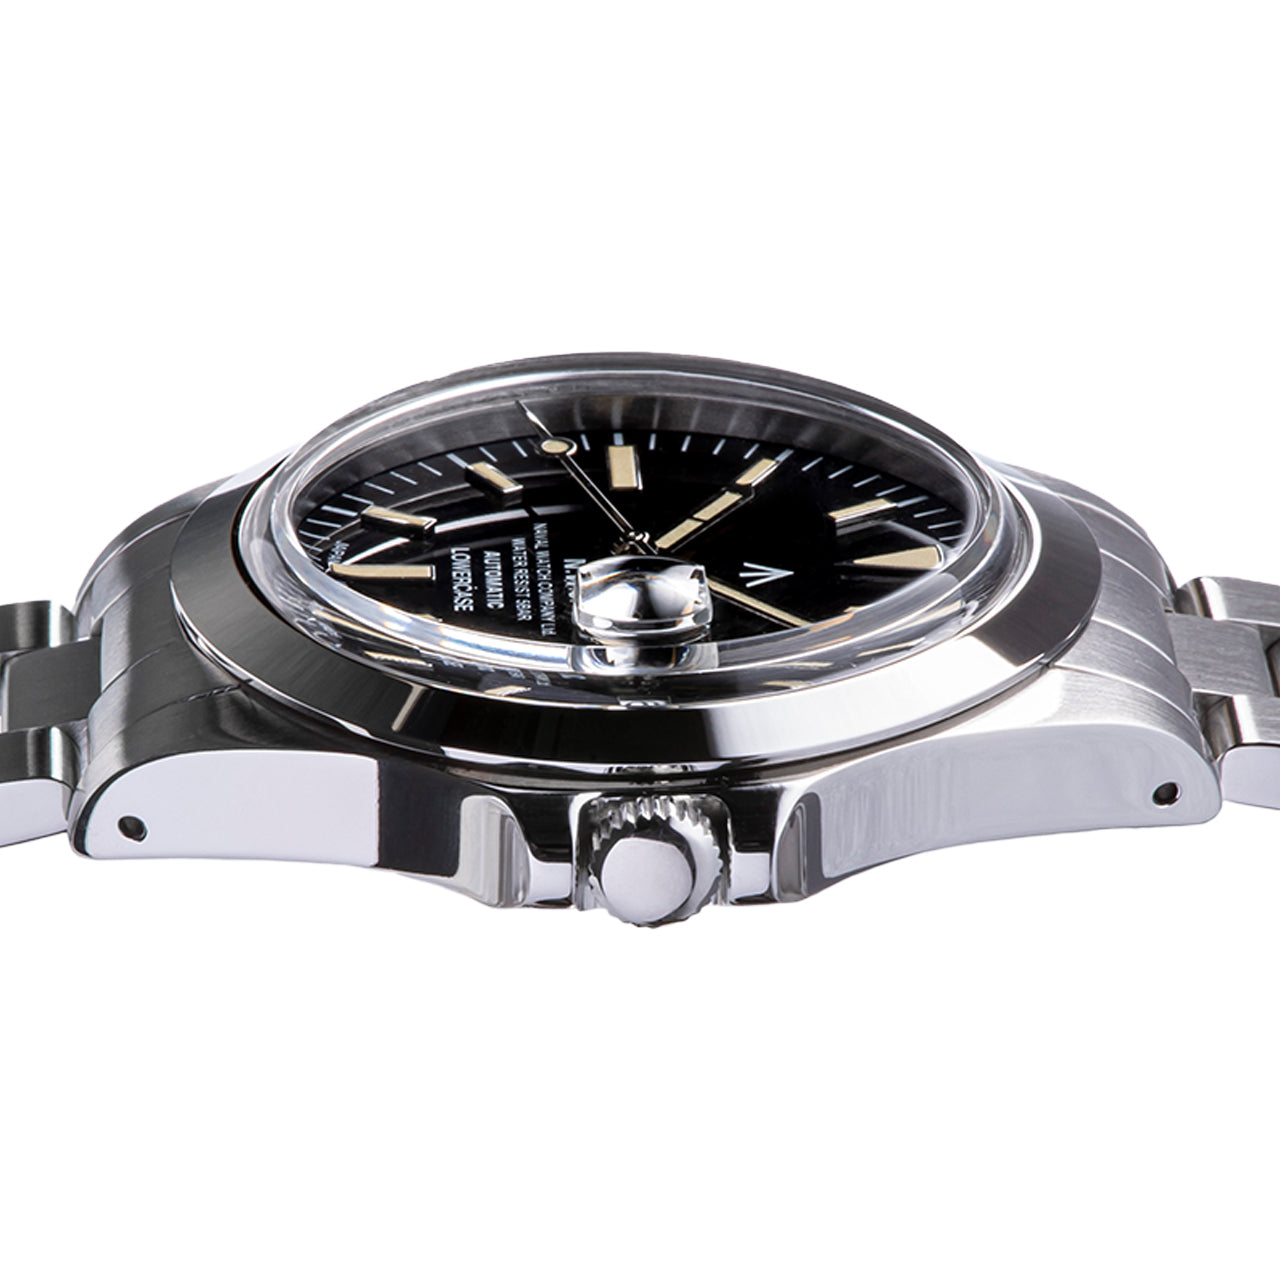 Naval Watch Co. FRXA001 Mechanical Watch | Uncrate Supply